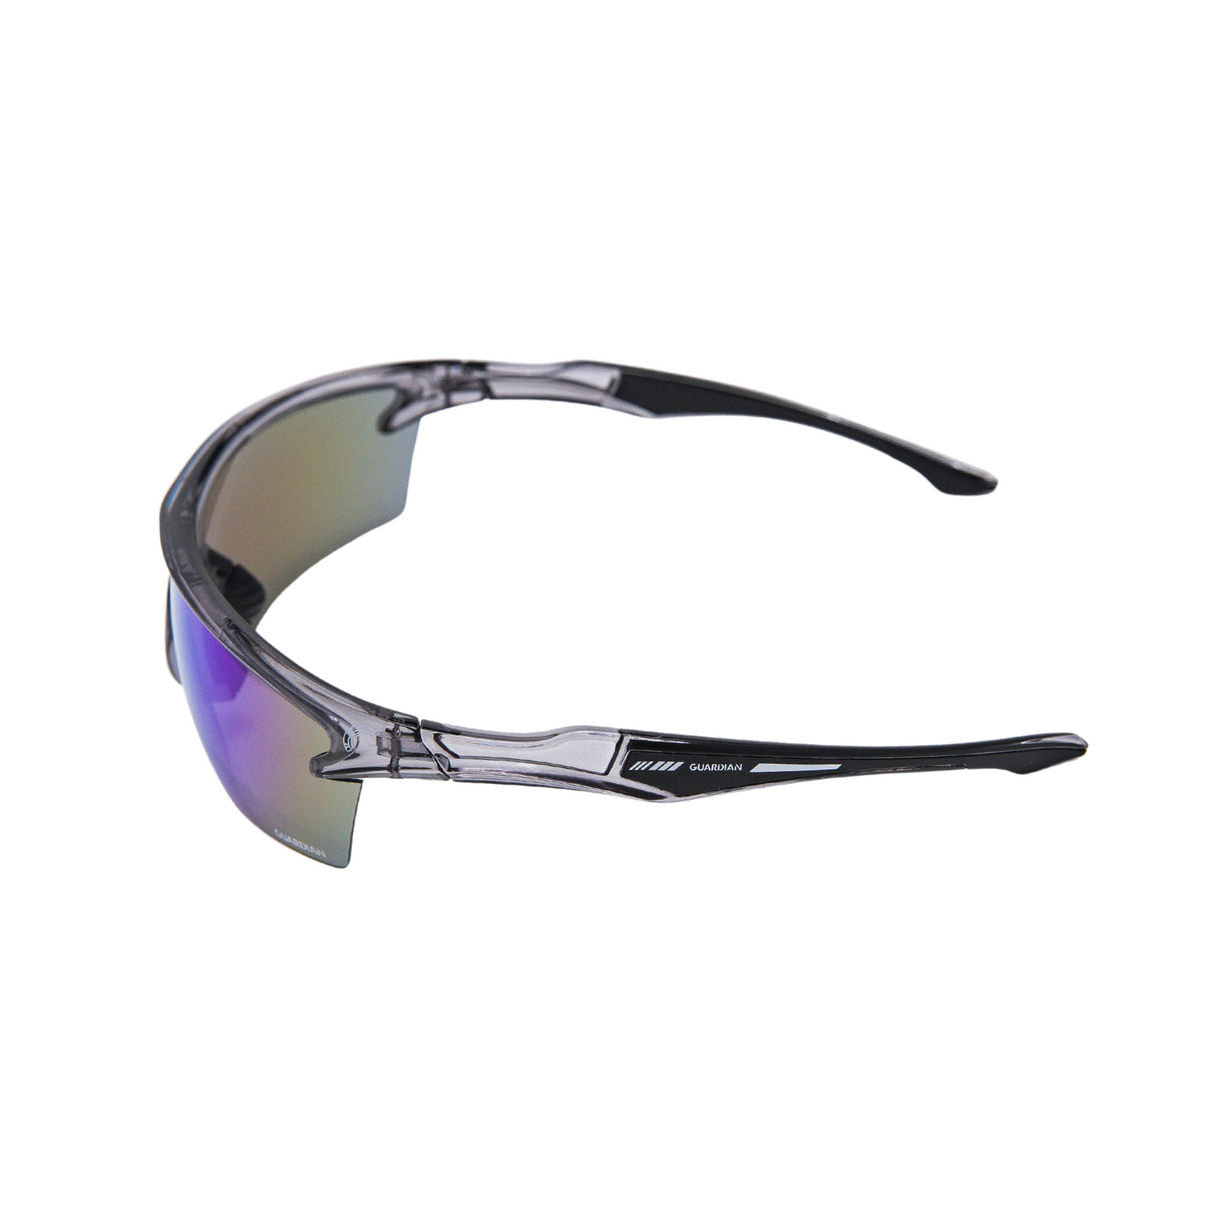 Guardian Baseball Baseball Sunglasses - Adult size, Blue/Grey